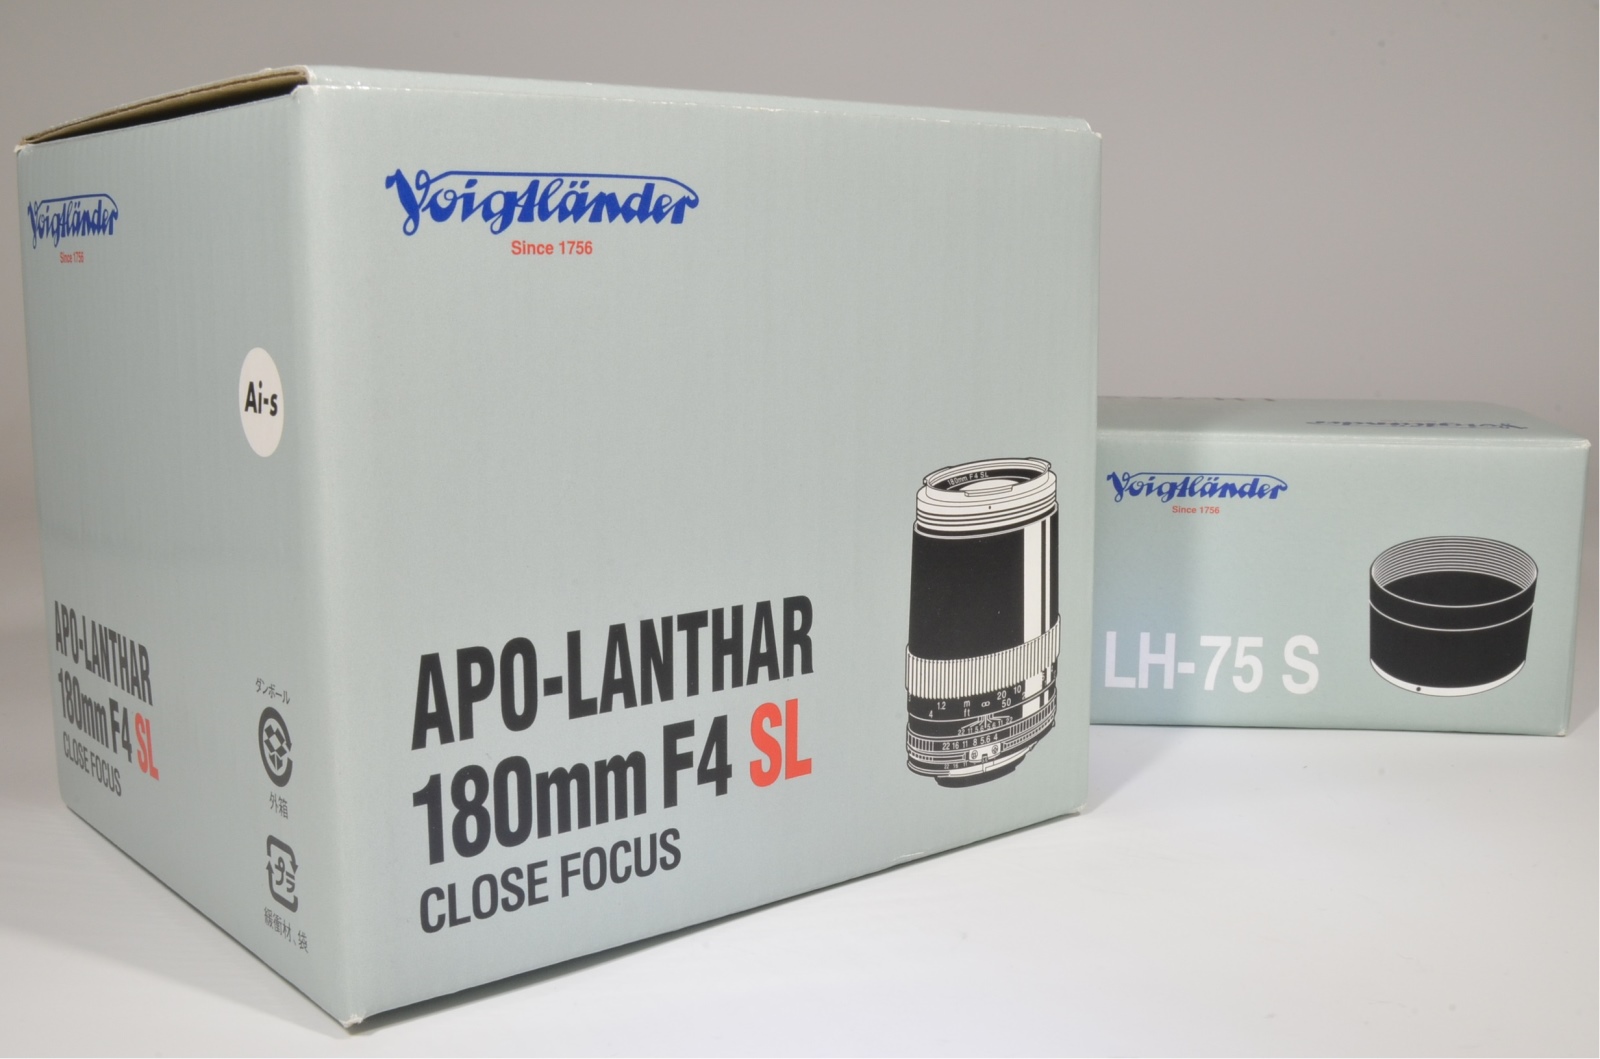 voigtlander apo-lanthar 180mm f4 sl for ai-s nikon with lh-75s